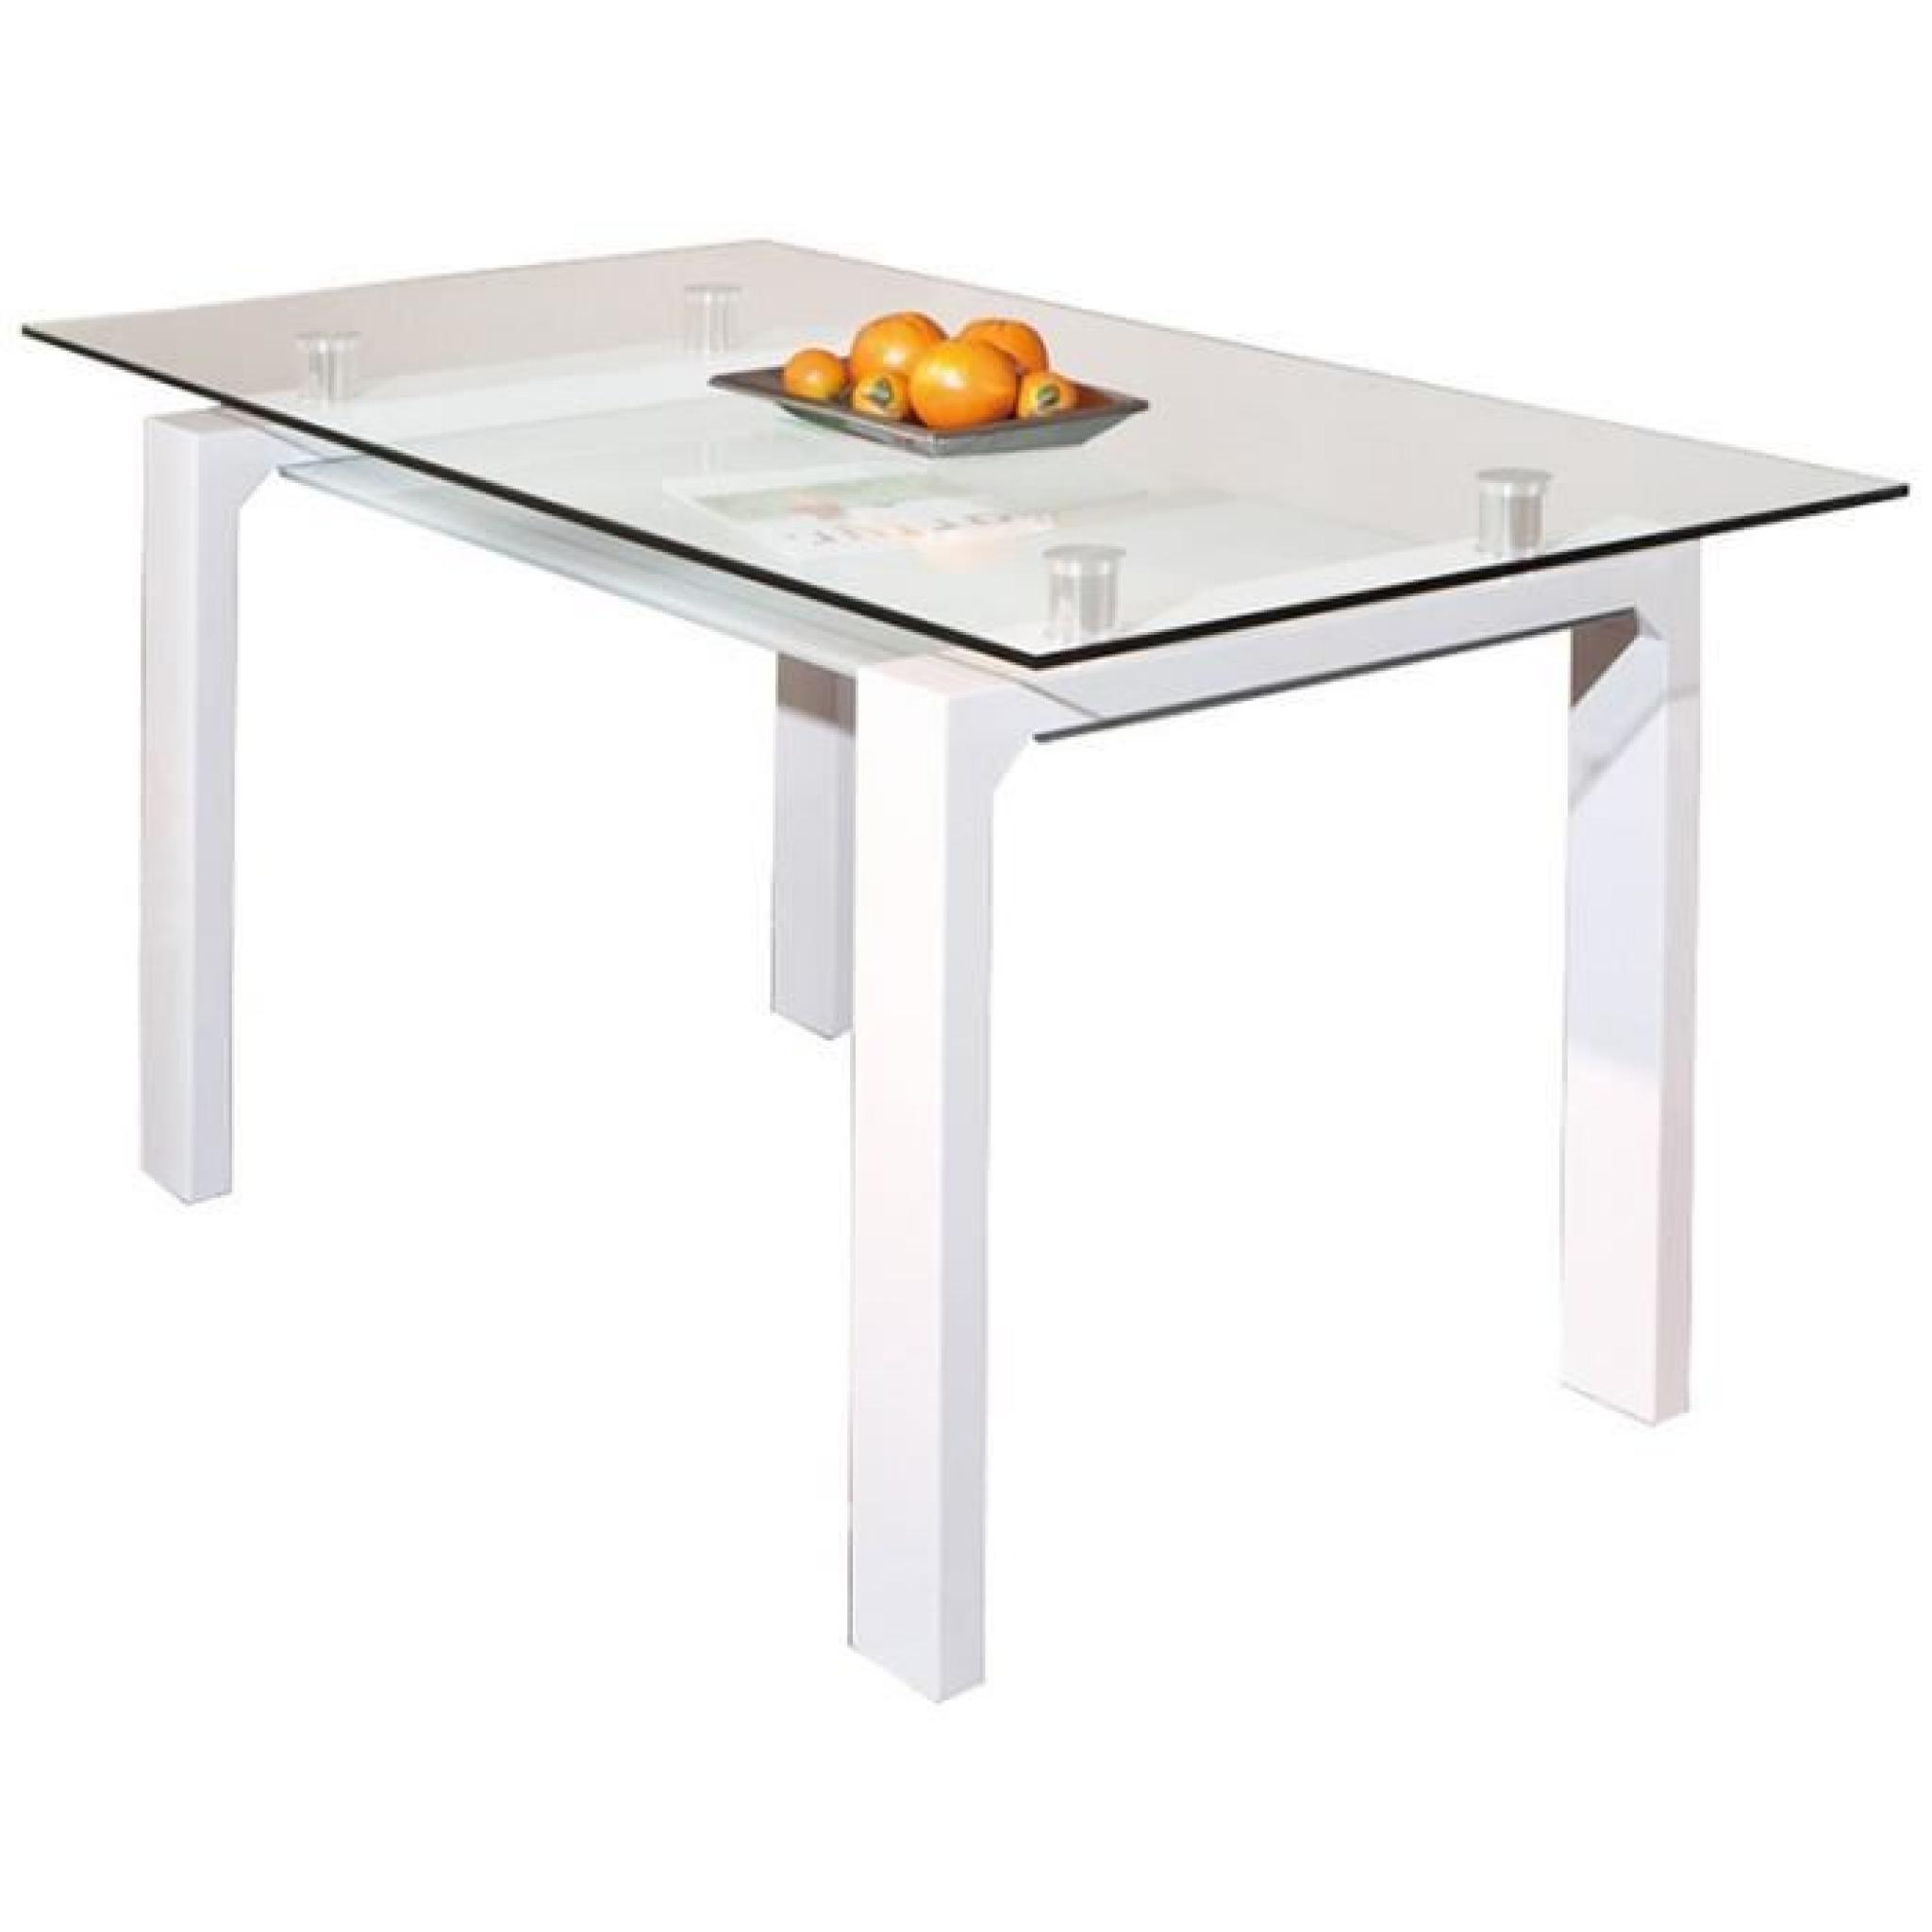 Table en verre Blanc, Dim : 150 x 80 x 77 cm